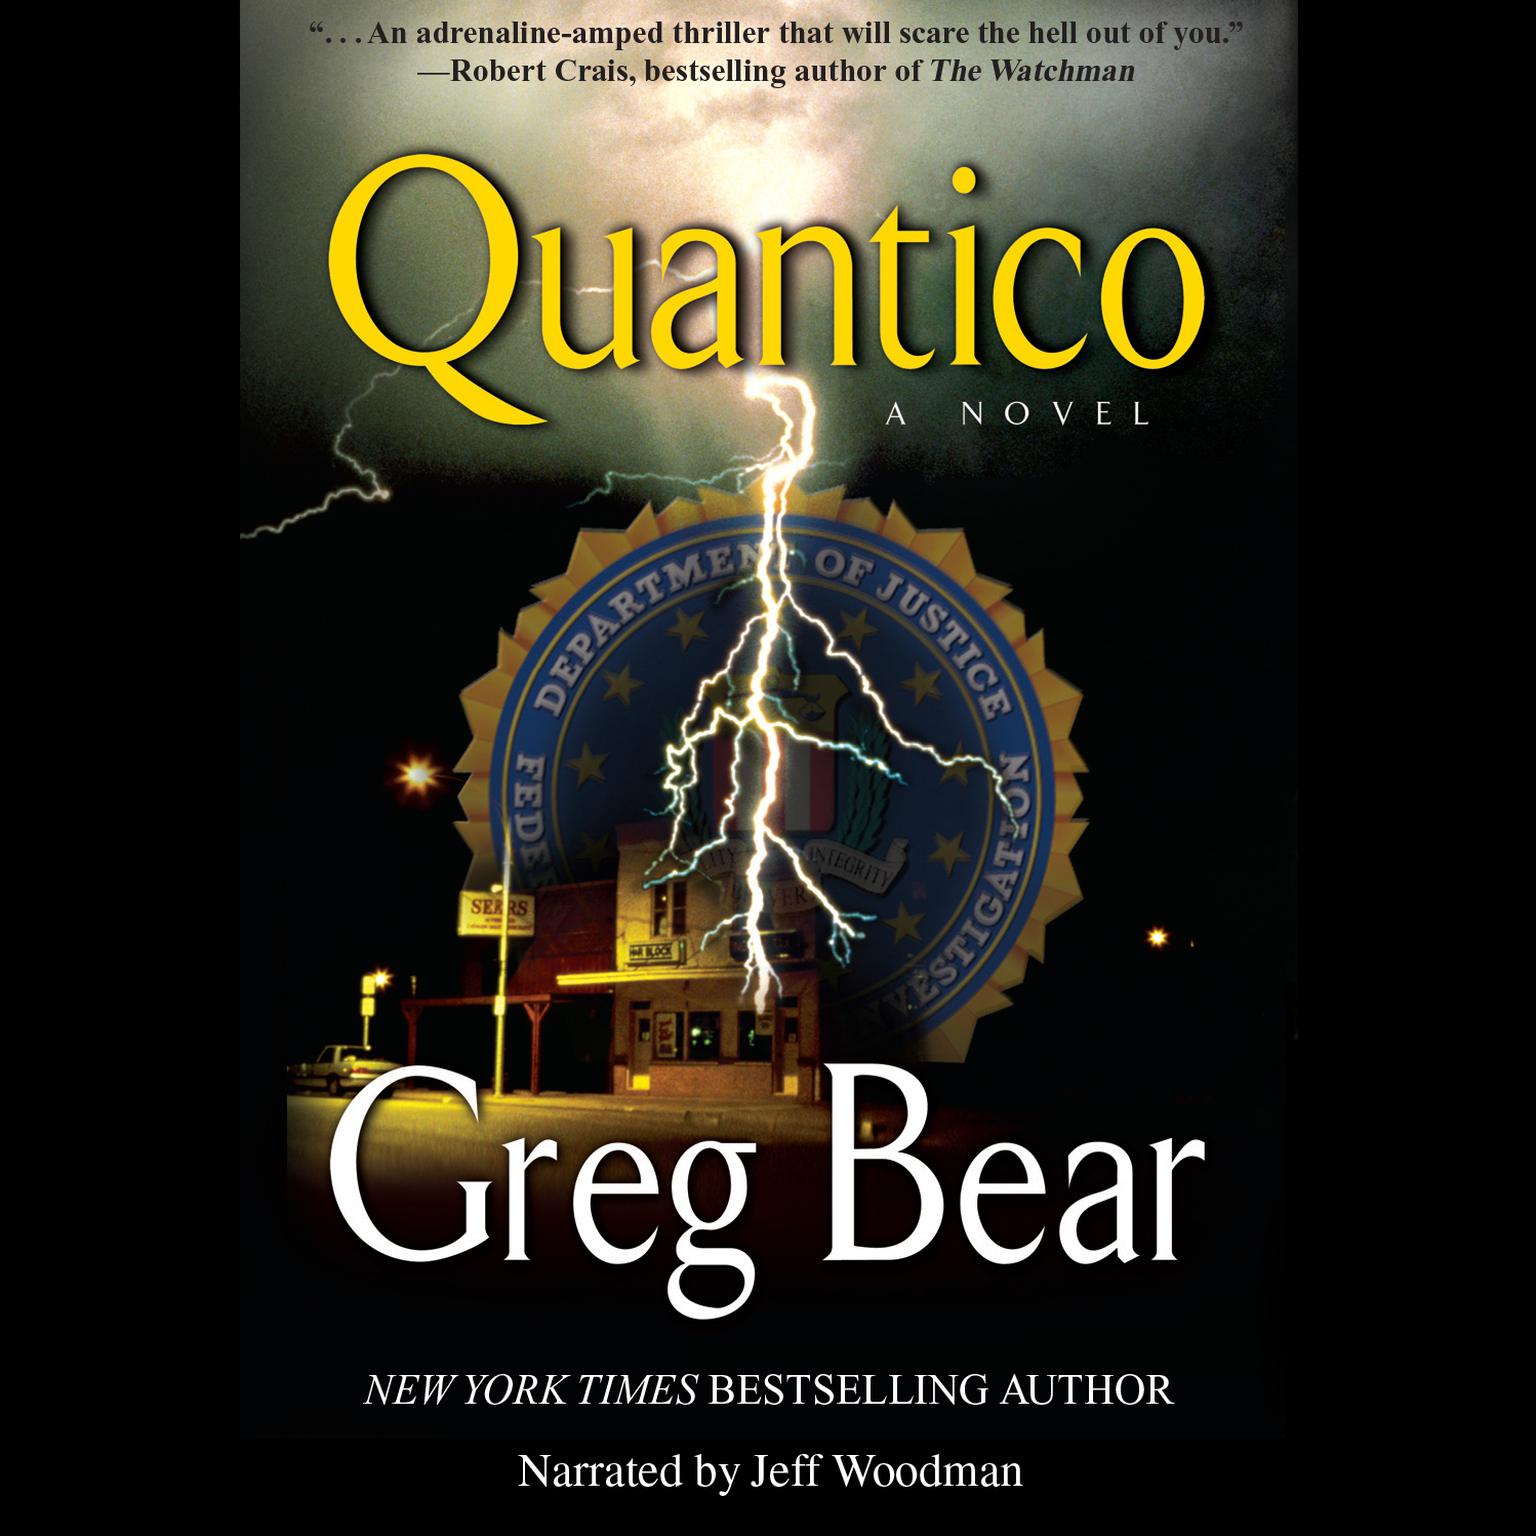 Quantico Audiobook, by Greg Bear